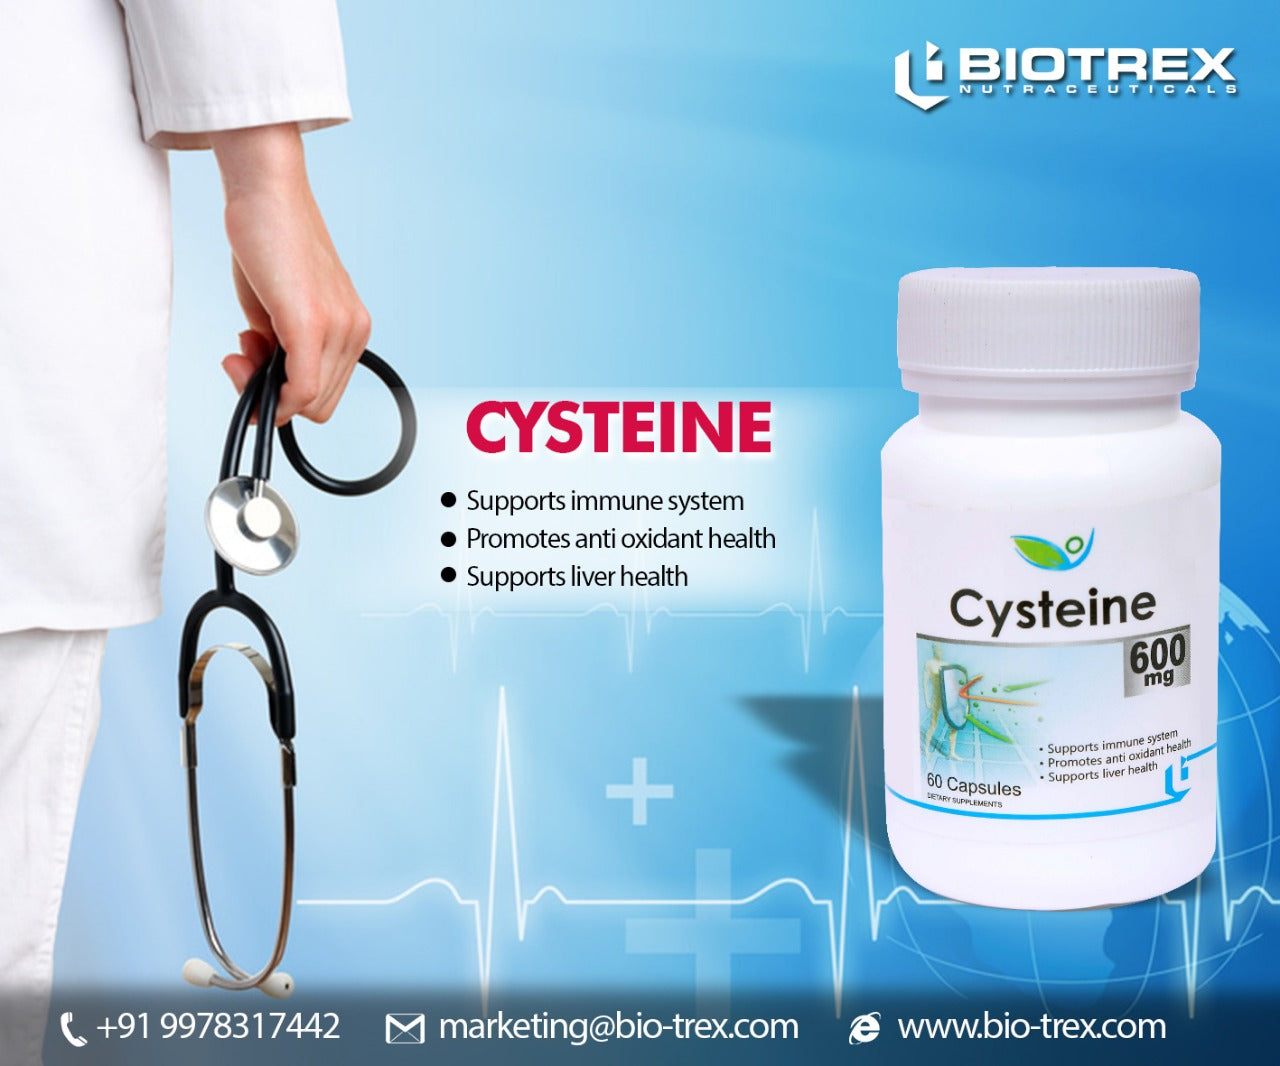 Biotrex Cysteine 600mg - 60 Capsules